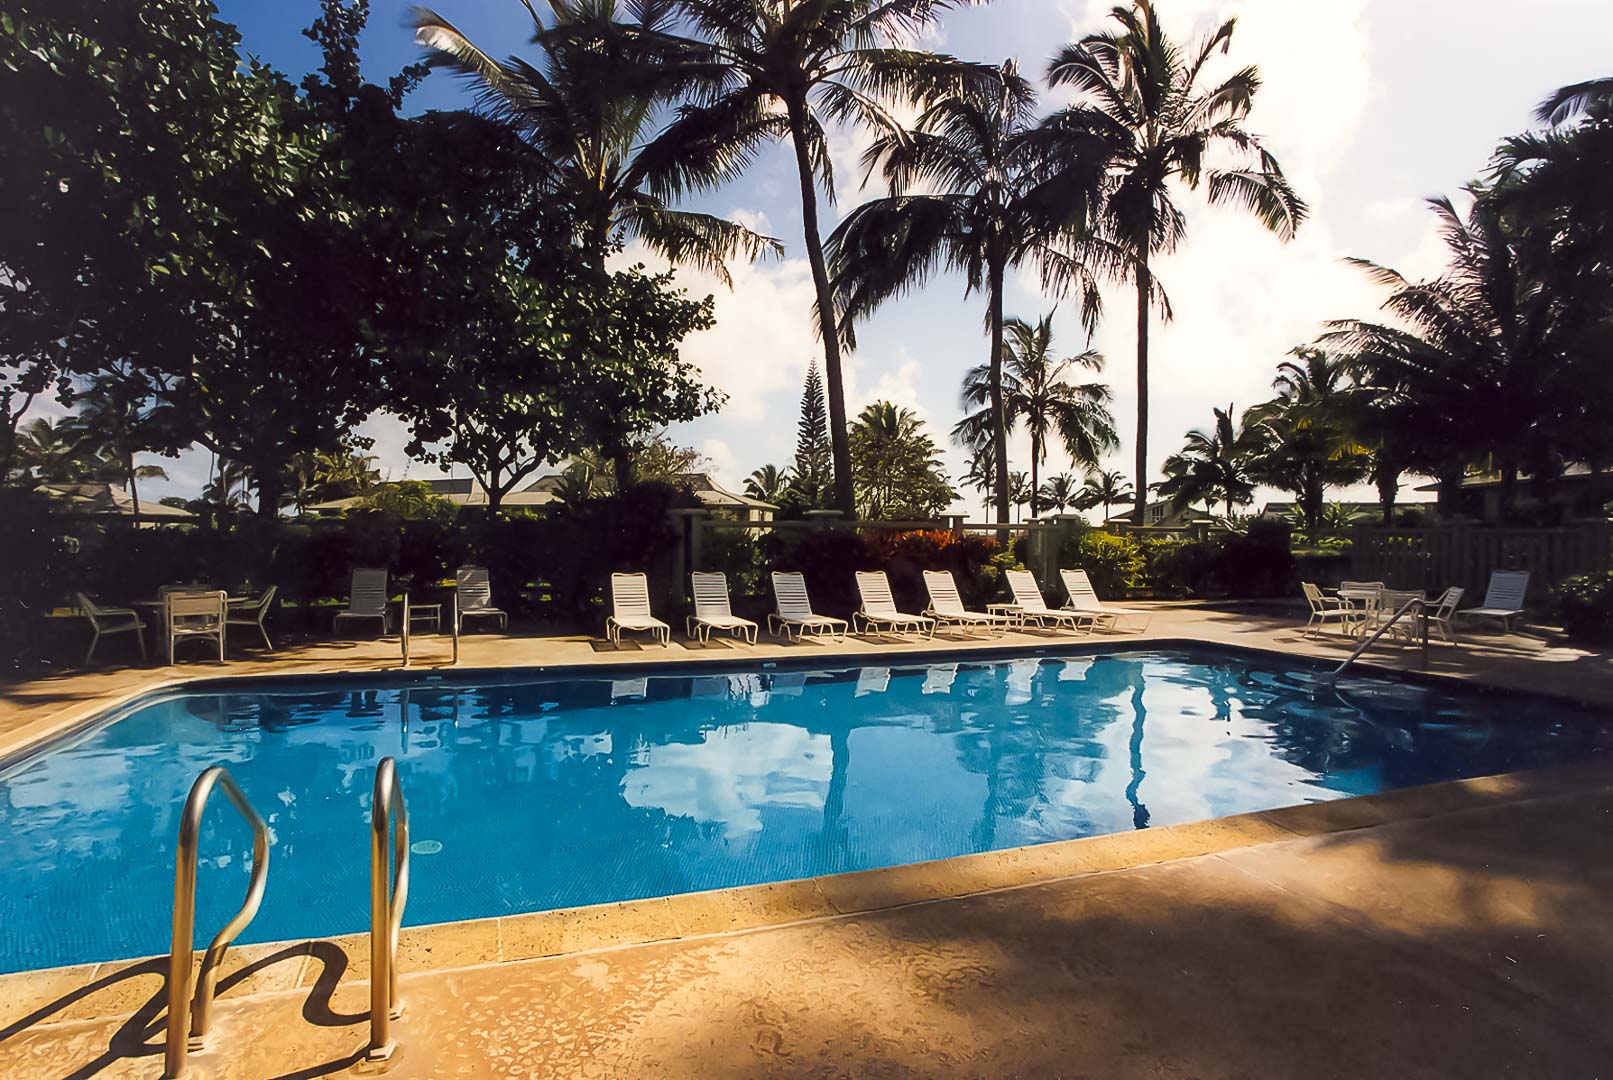 A refreshing pool at VRI's Alii Kai Resort in Hawaii